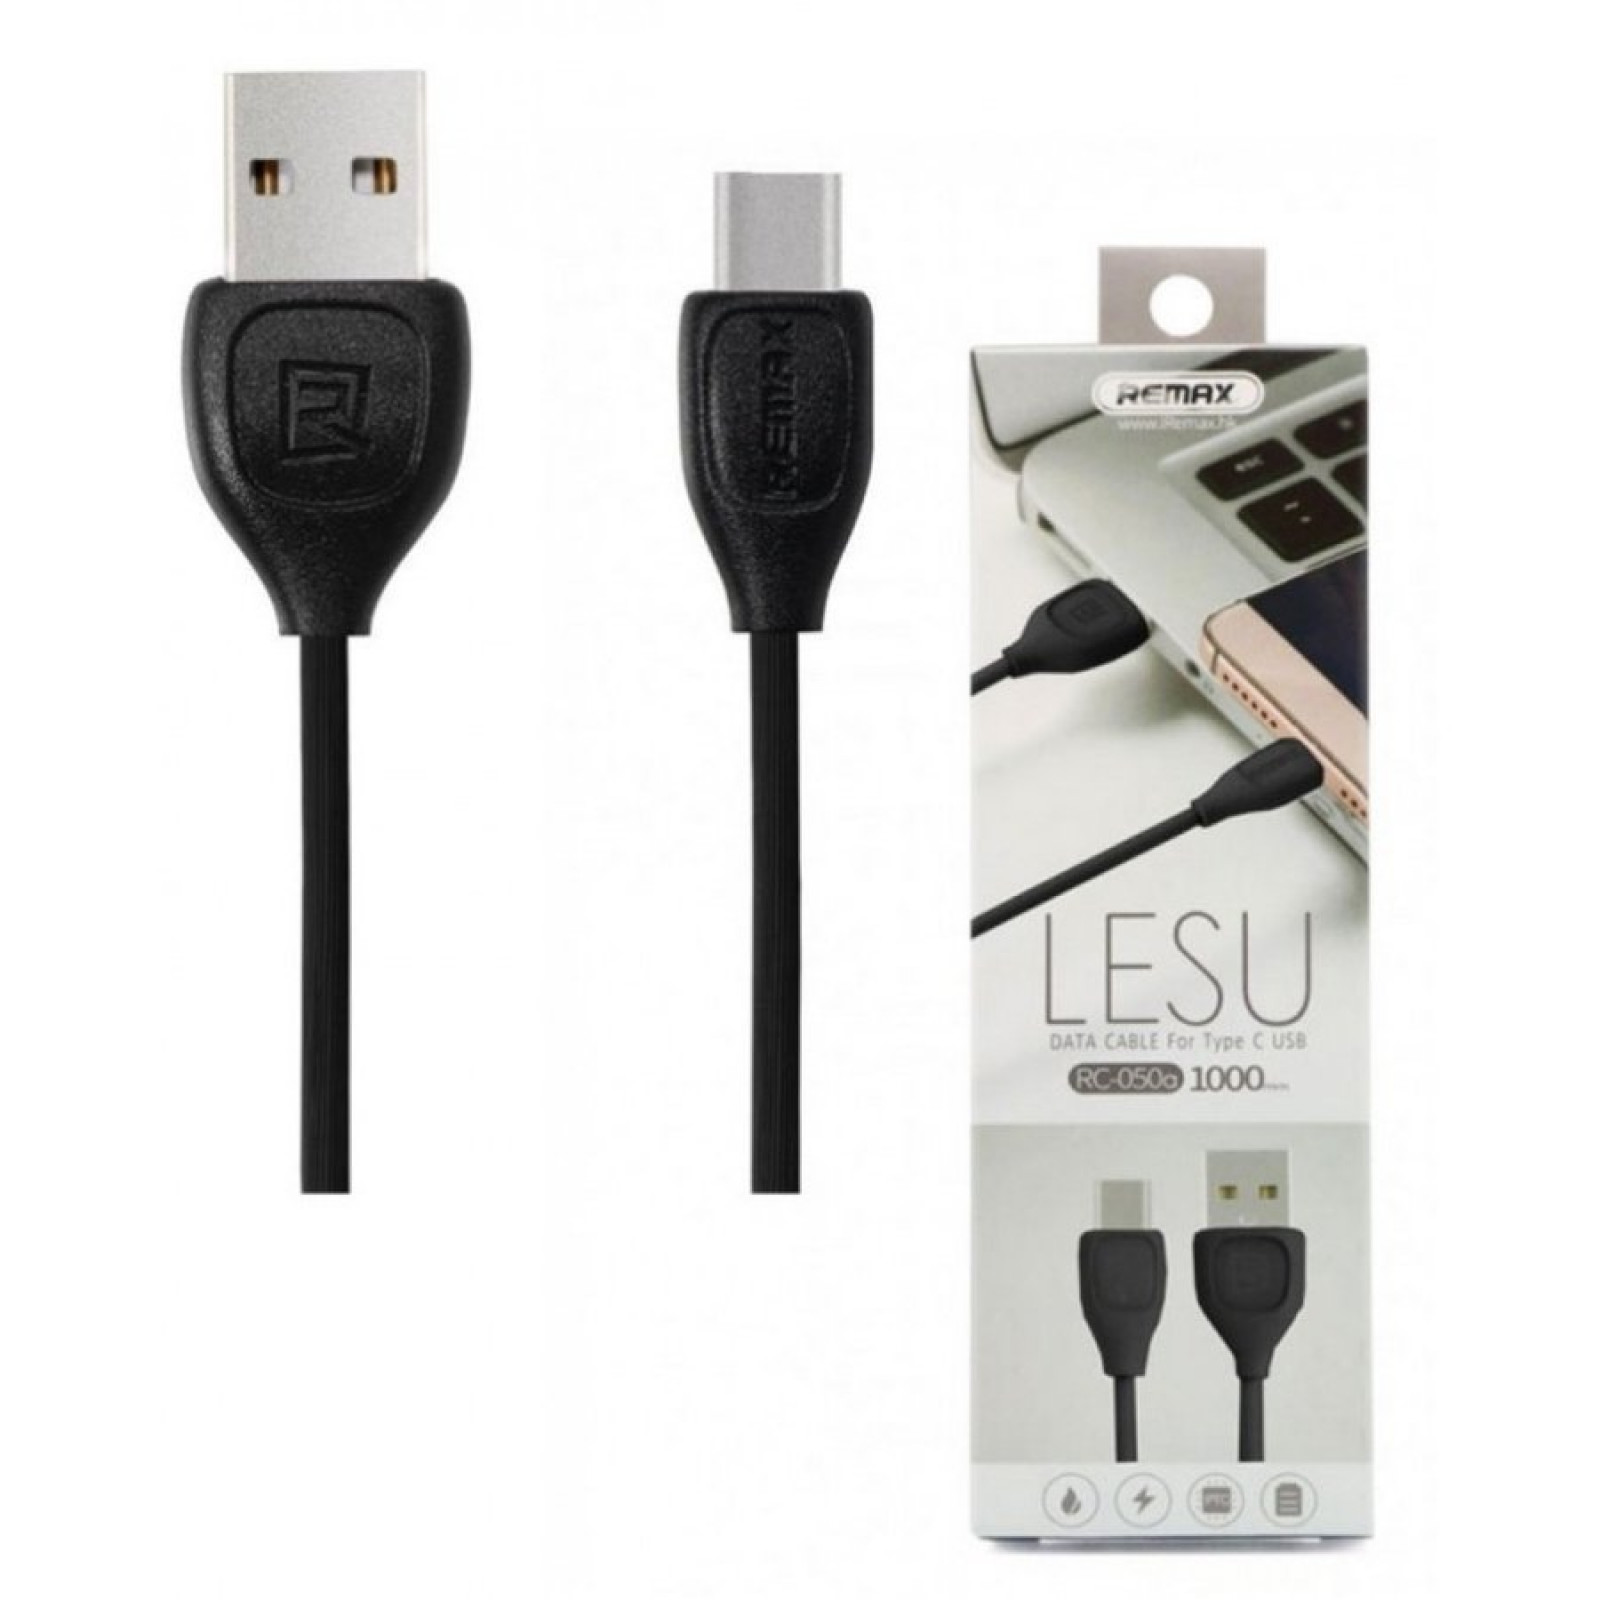 Дата кабел Remax Lesu RC-050a USB Type C черен 1m